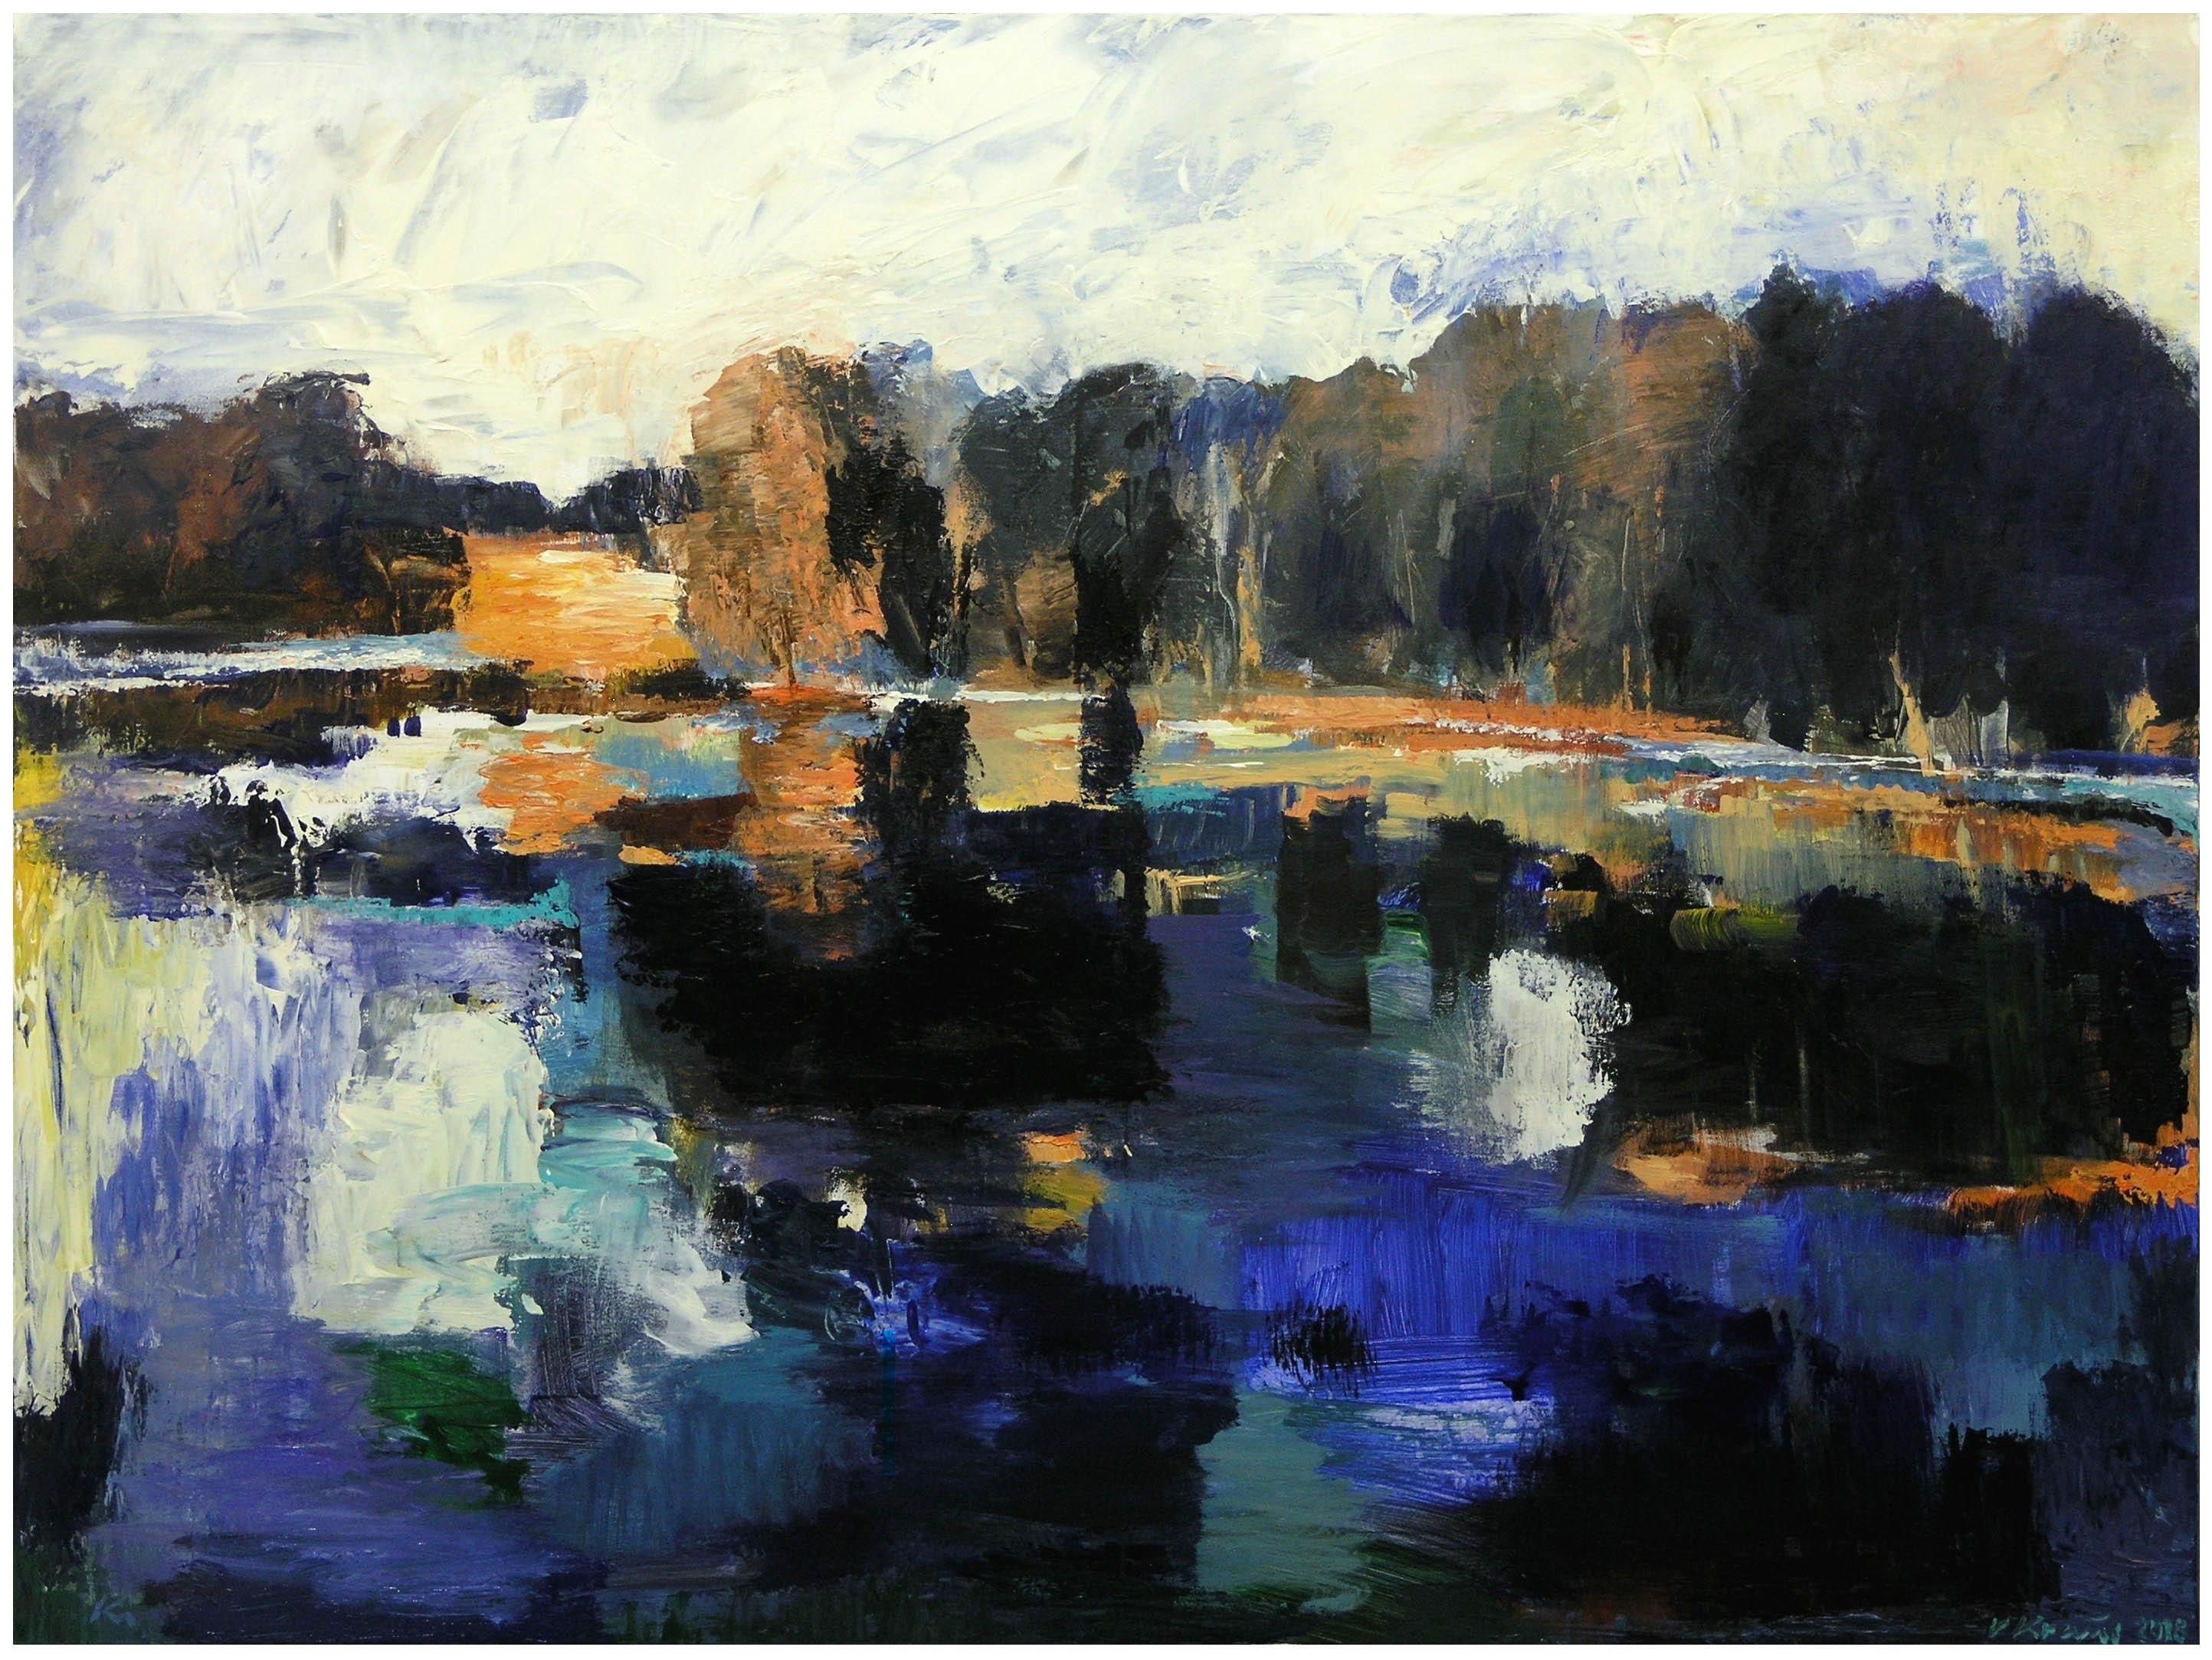 Victor Kraus, "Landscape for an Unknown Painter", Acryl auf Leinwand, 120 x 160 cm